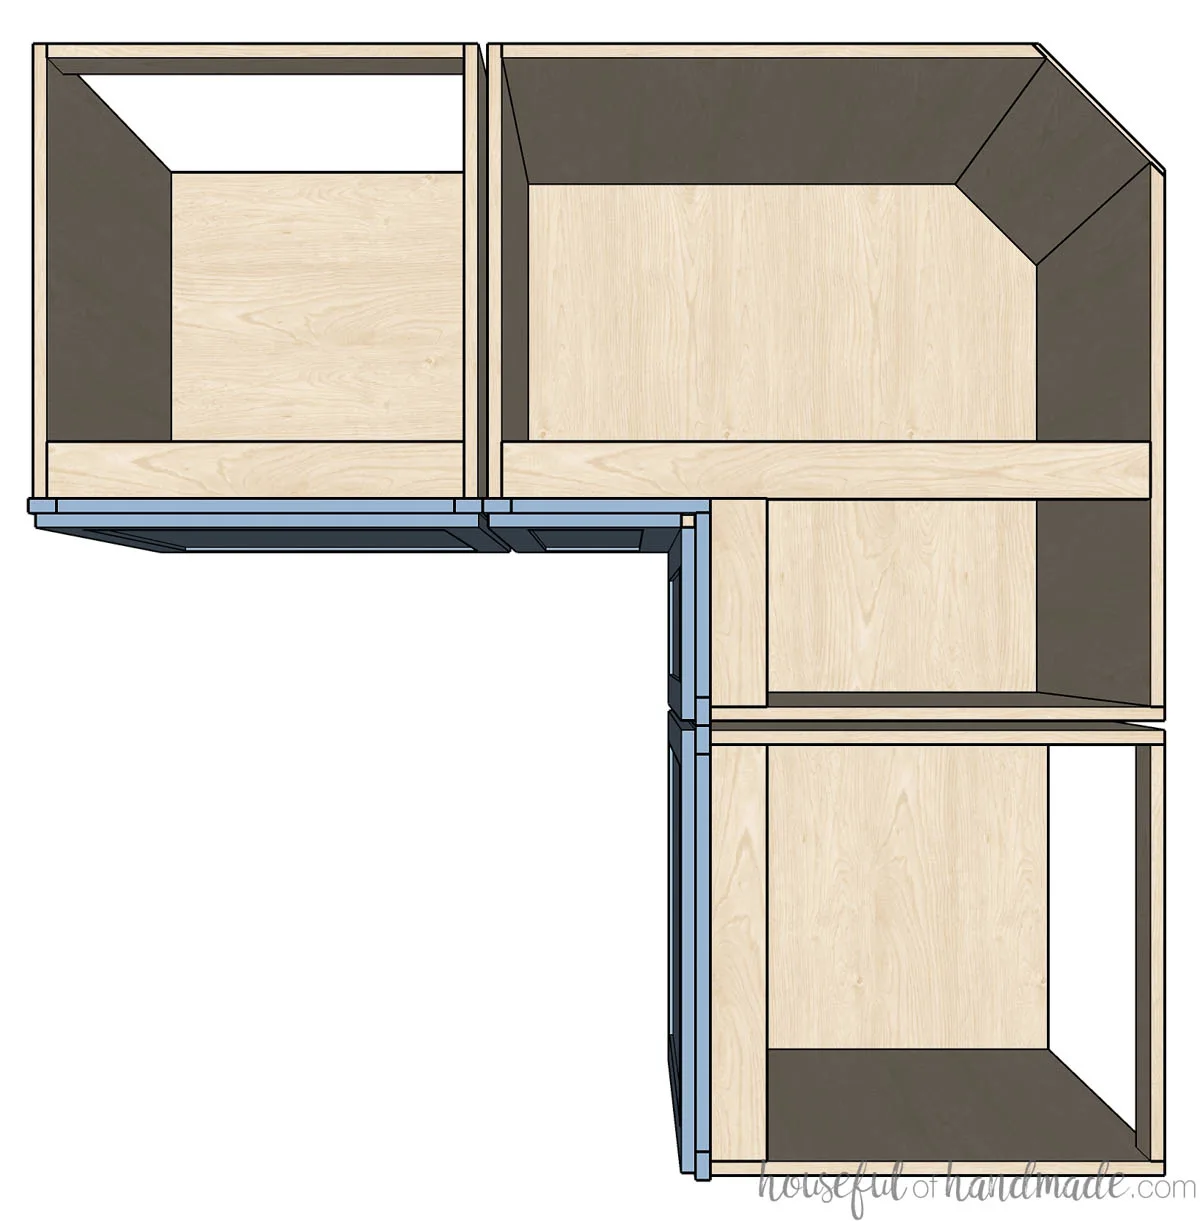 Top down view of a bi-fold corner cabinet.